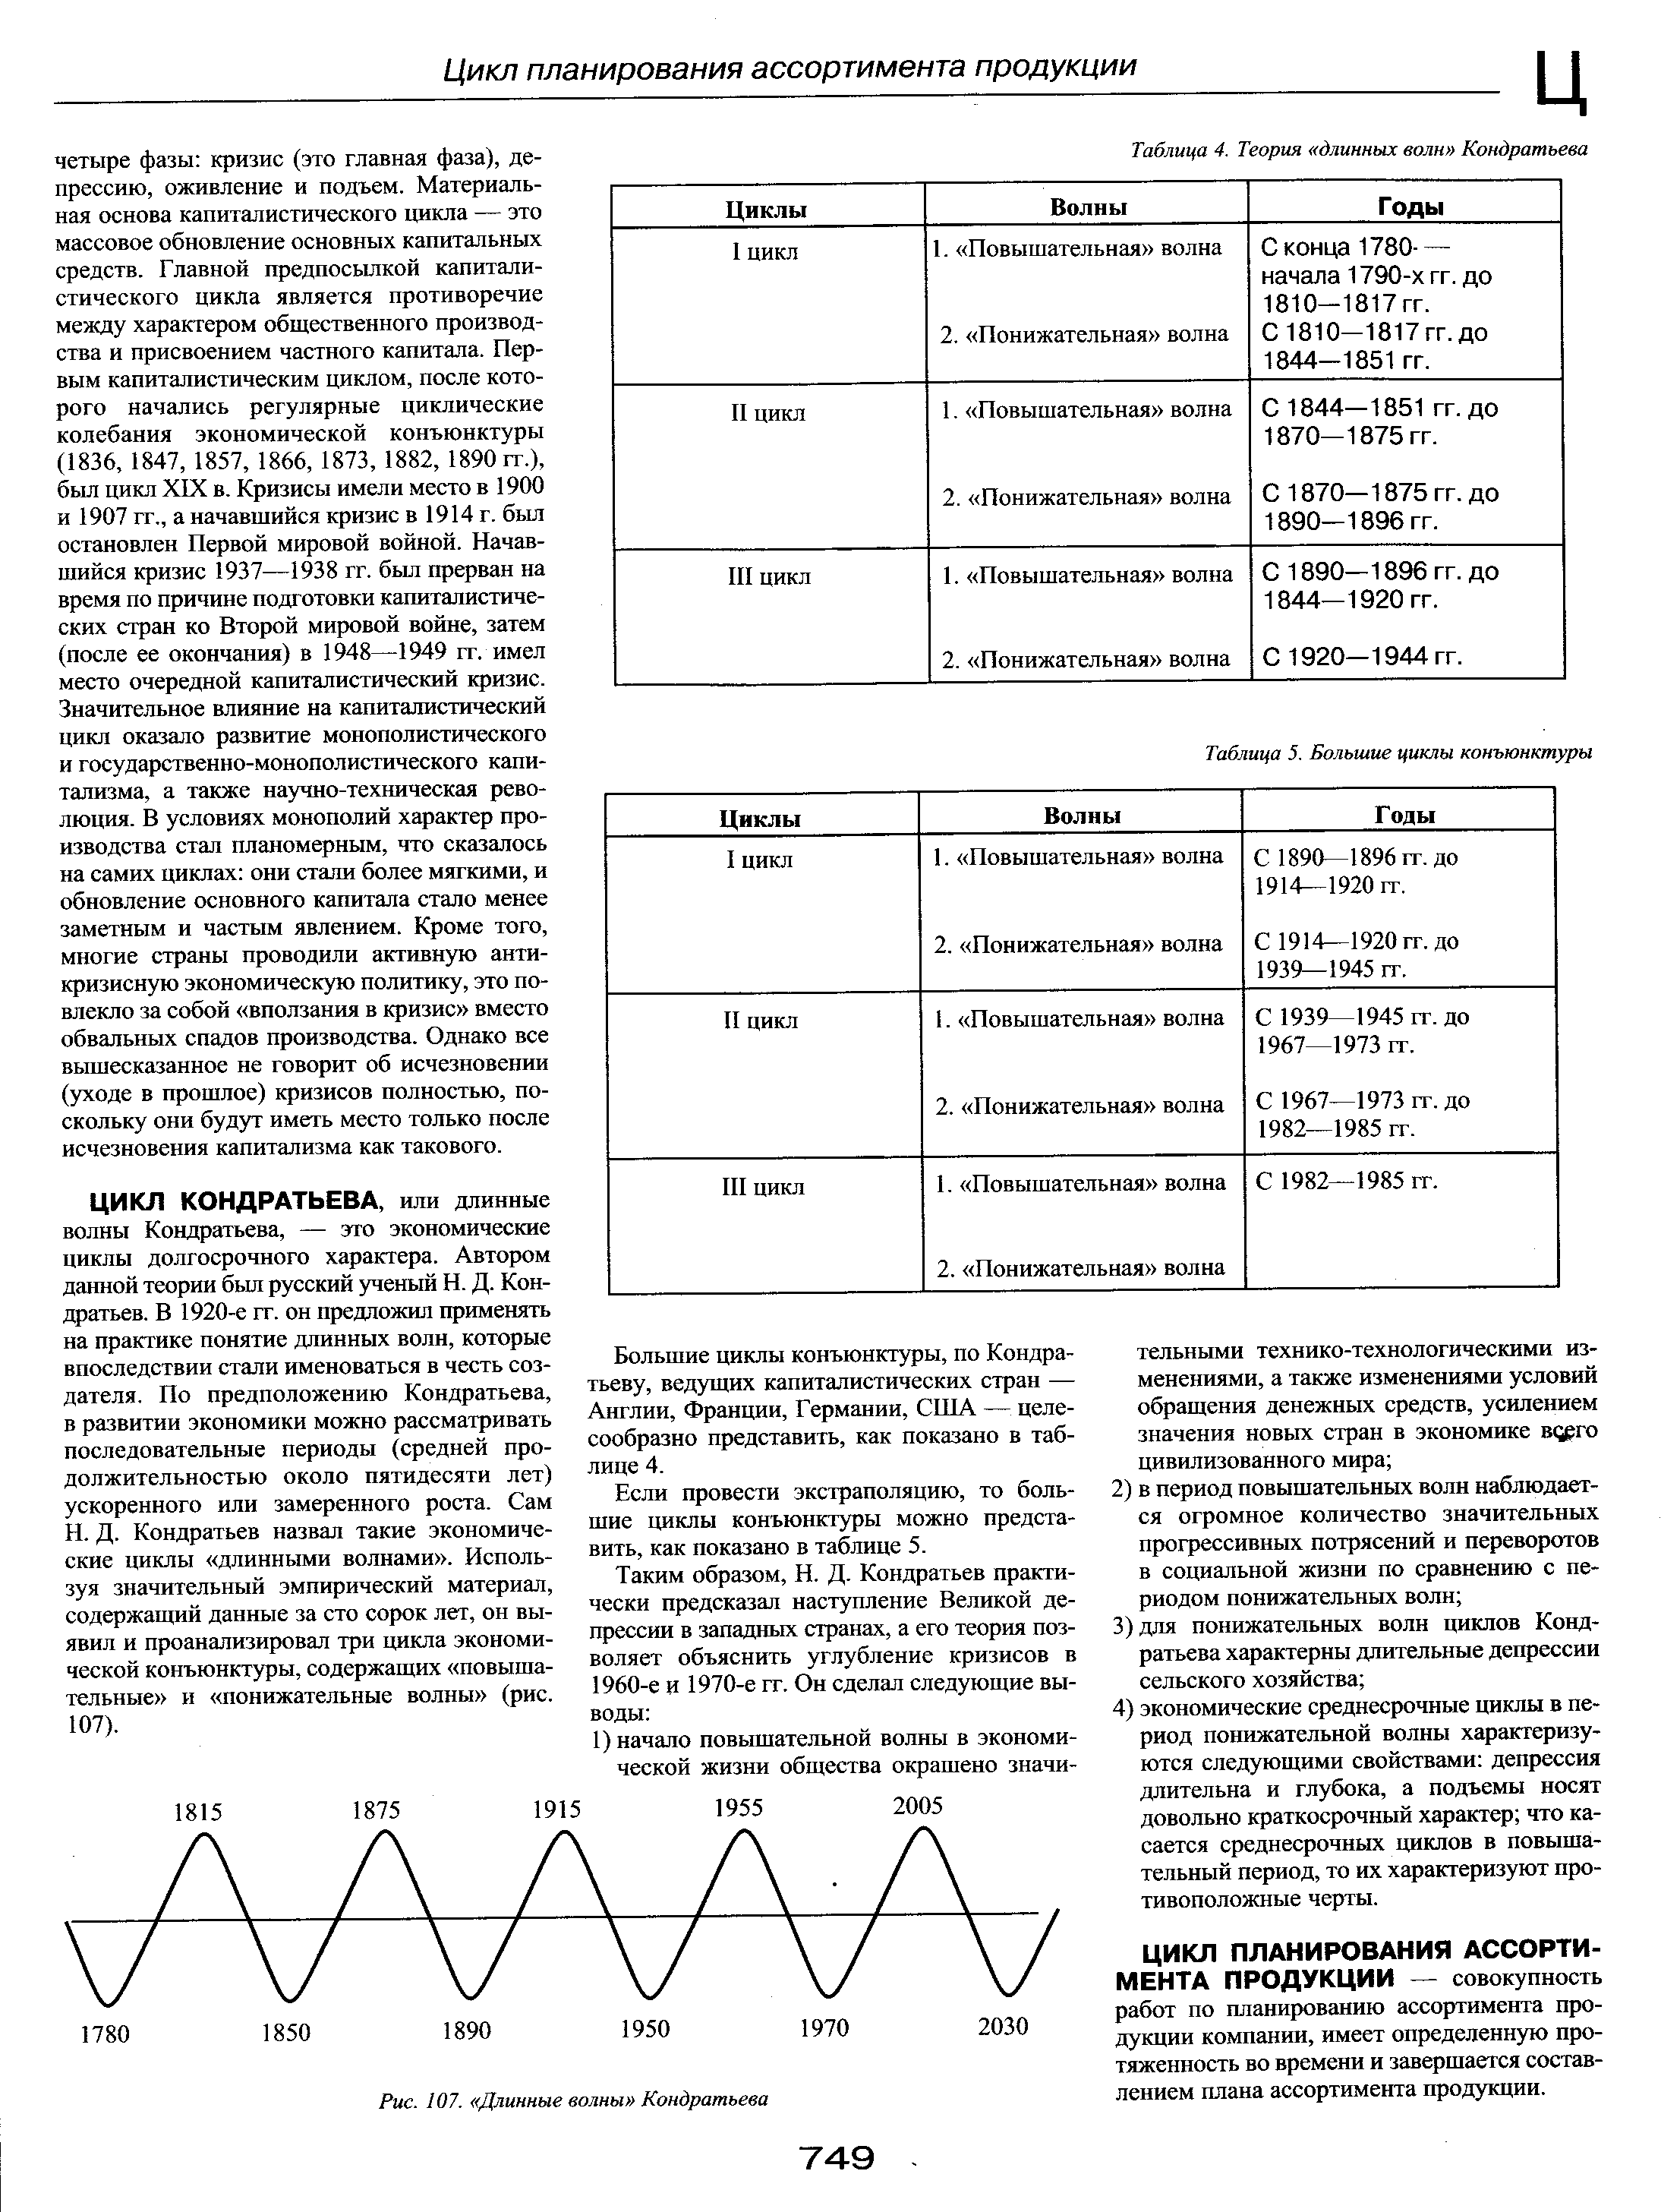 Таблица 5. <a href="/info/19149">Большие циклы</a> конъюнктуры
